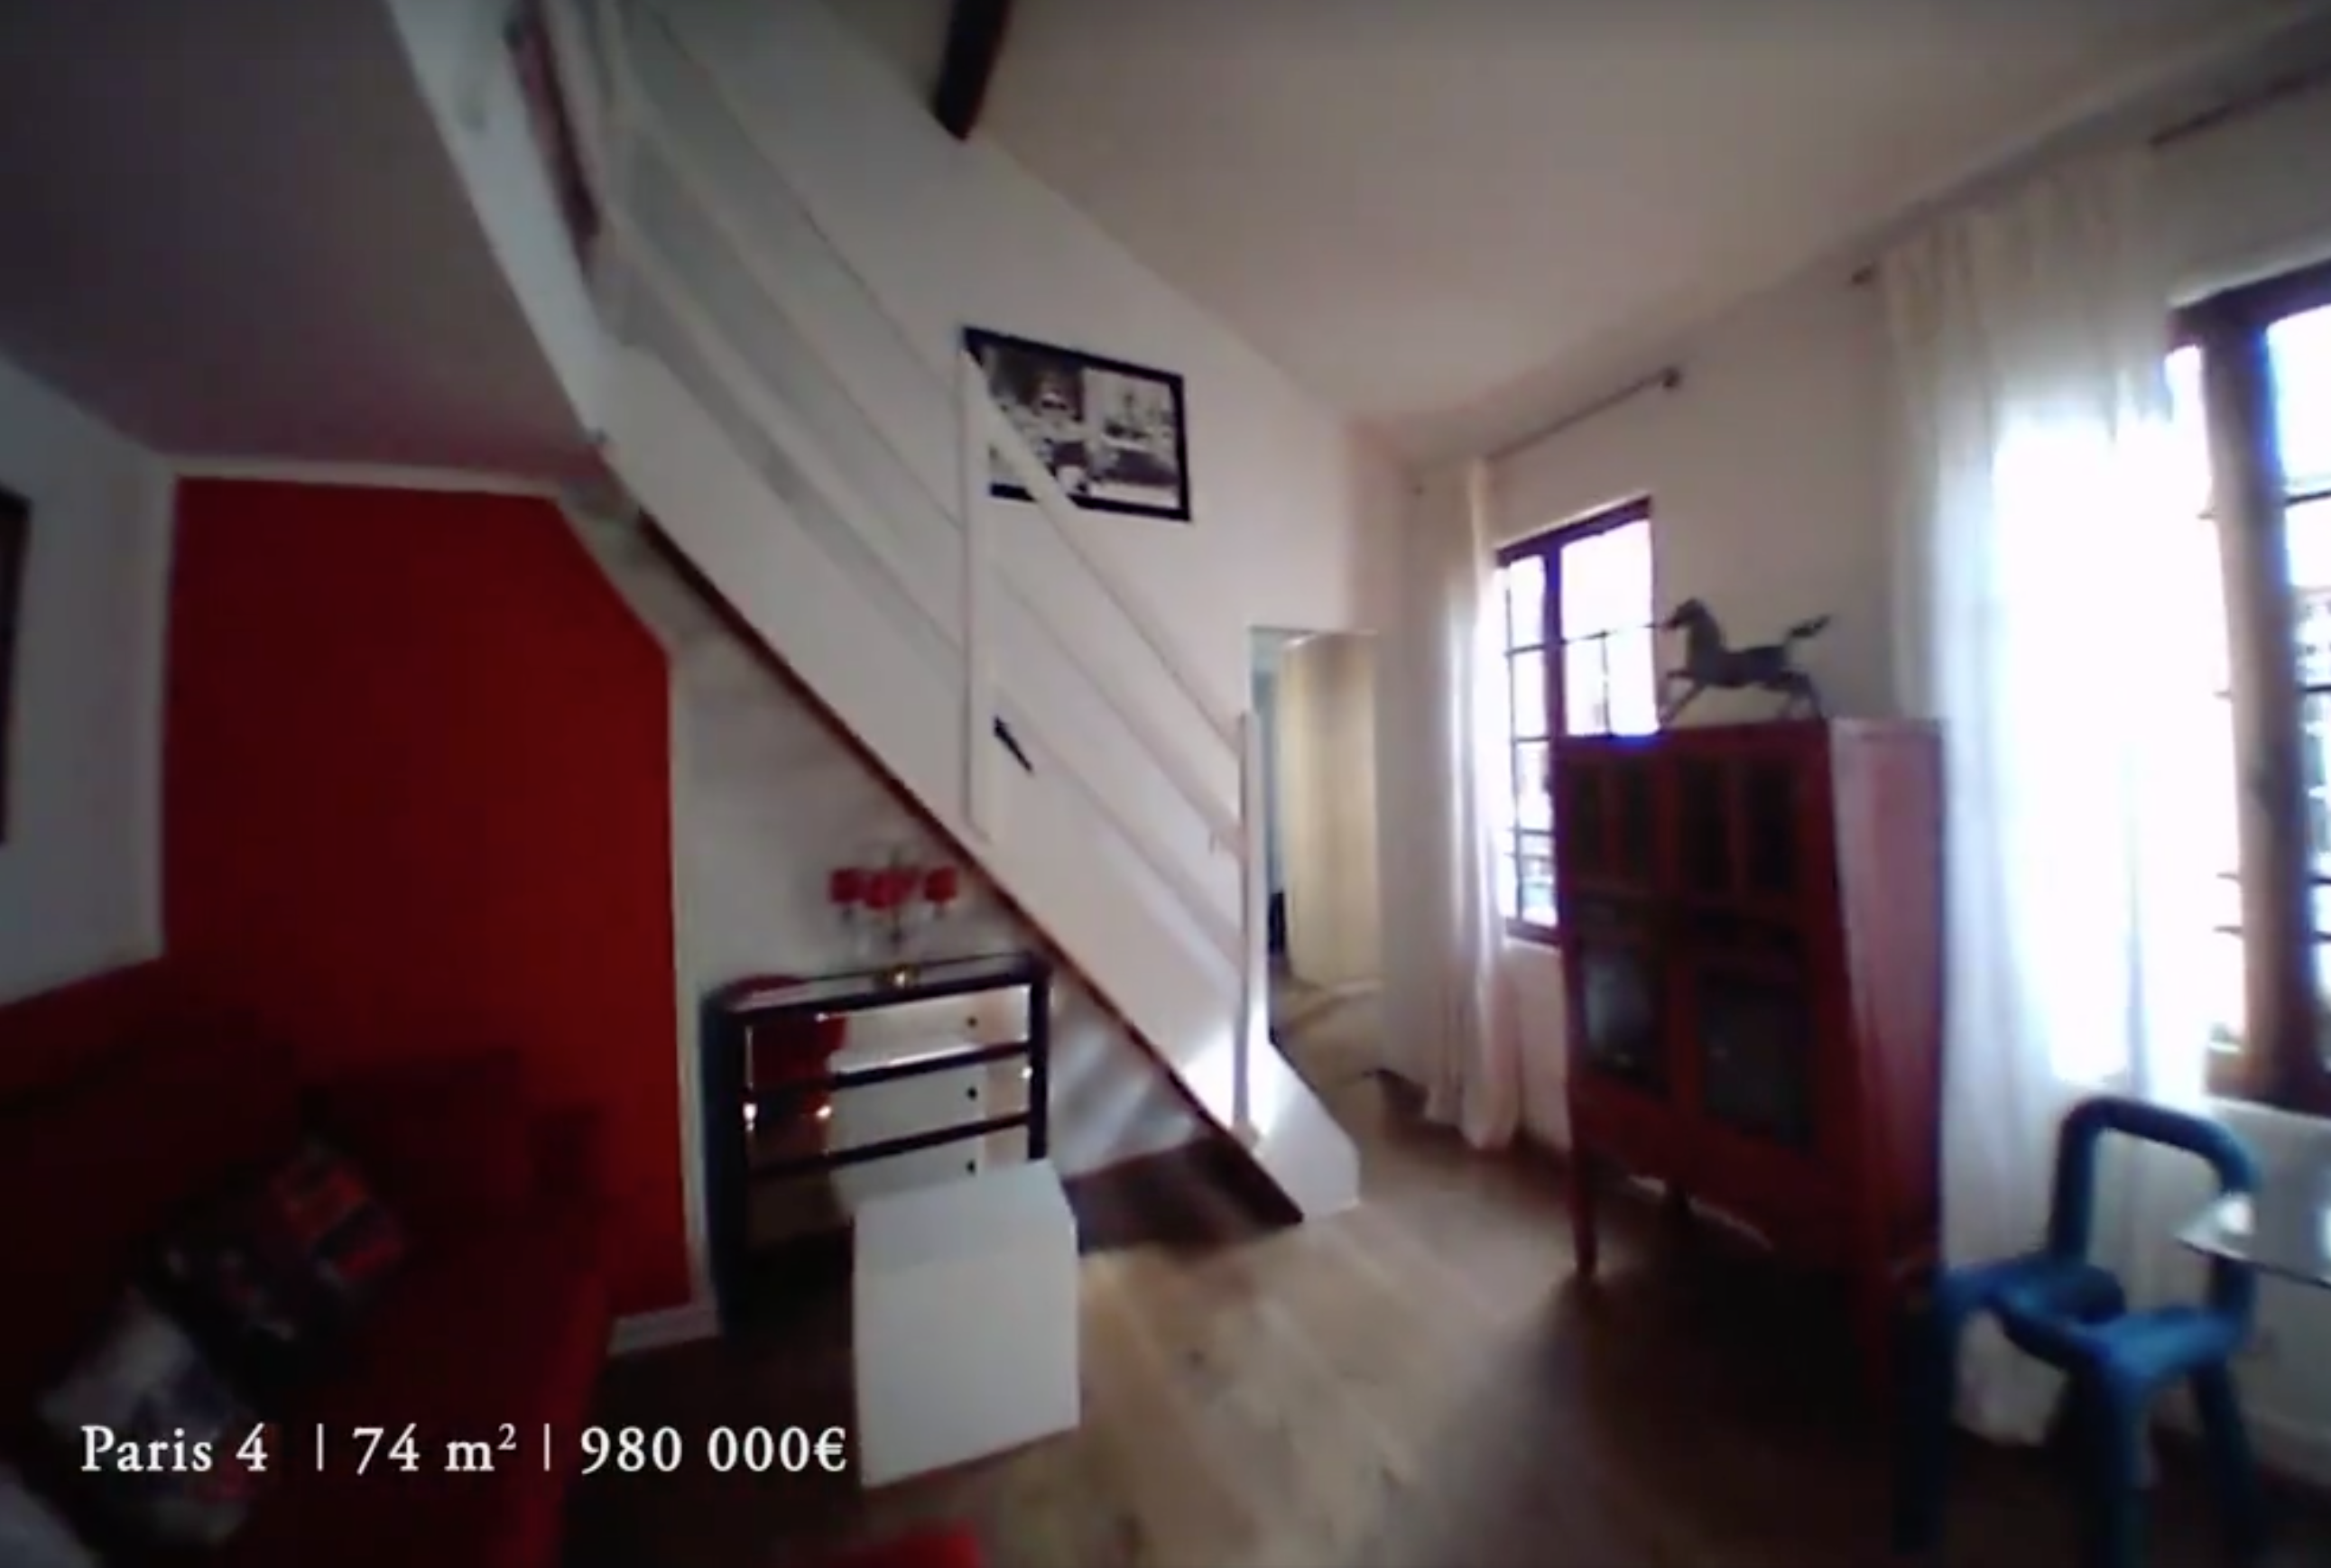 Un nano drone dans l’immobilier !